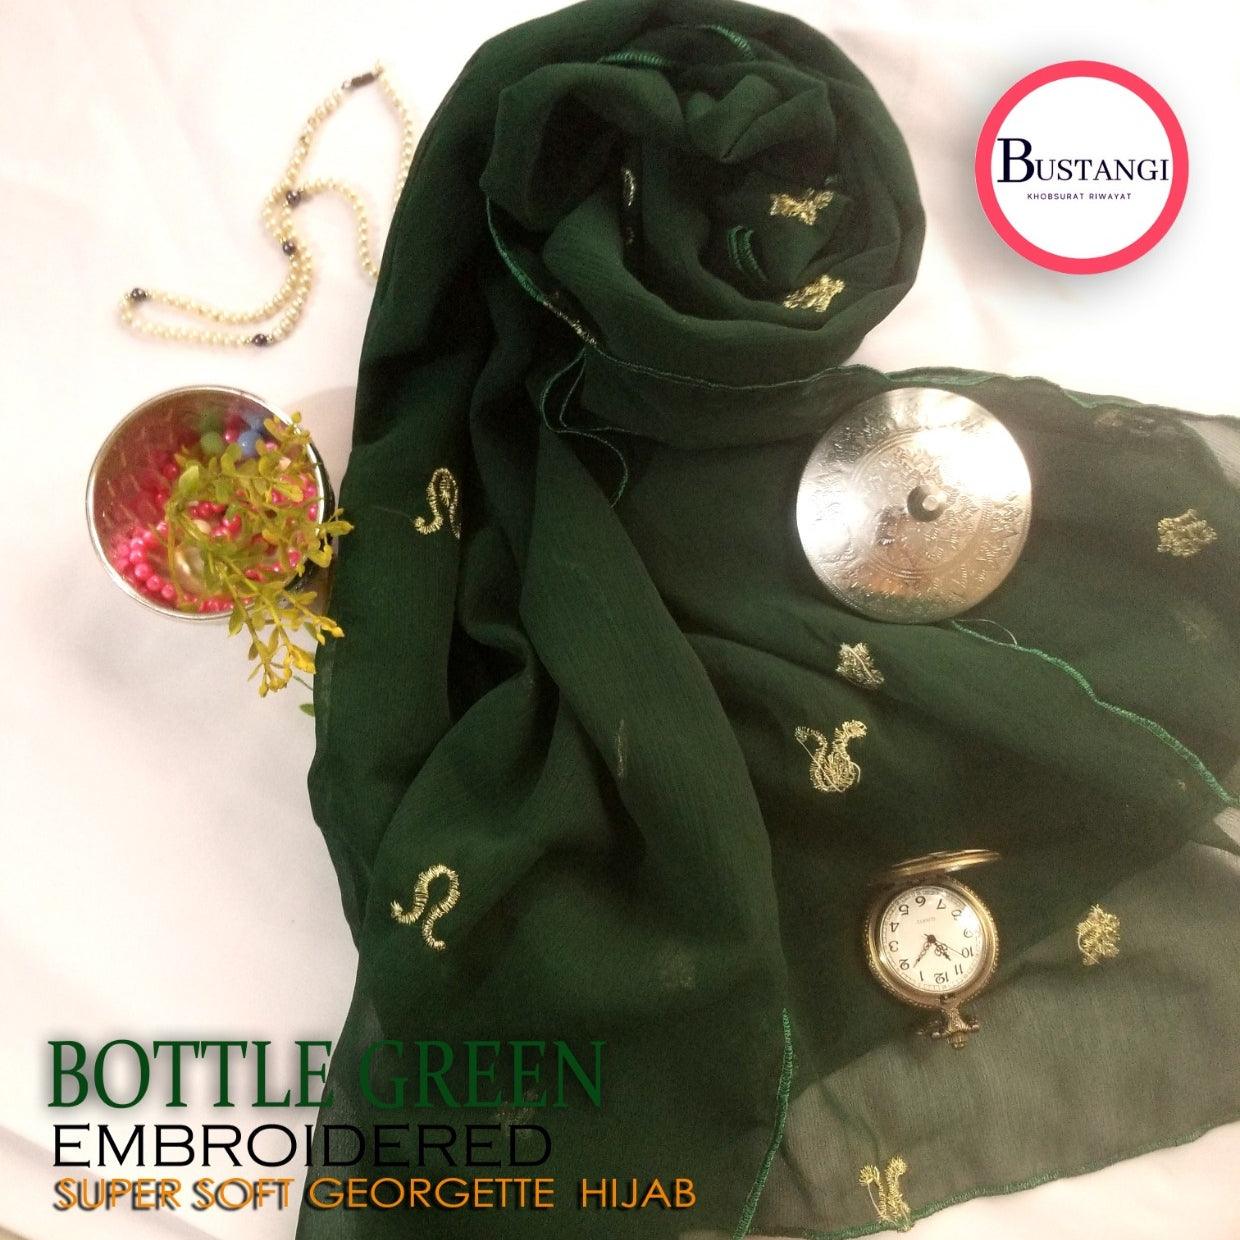 Bottle Green Embroidered Hijab - Bustangi